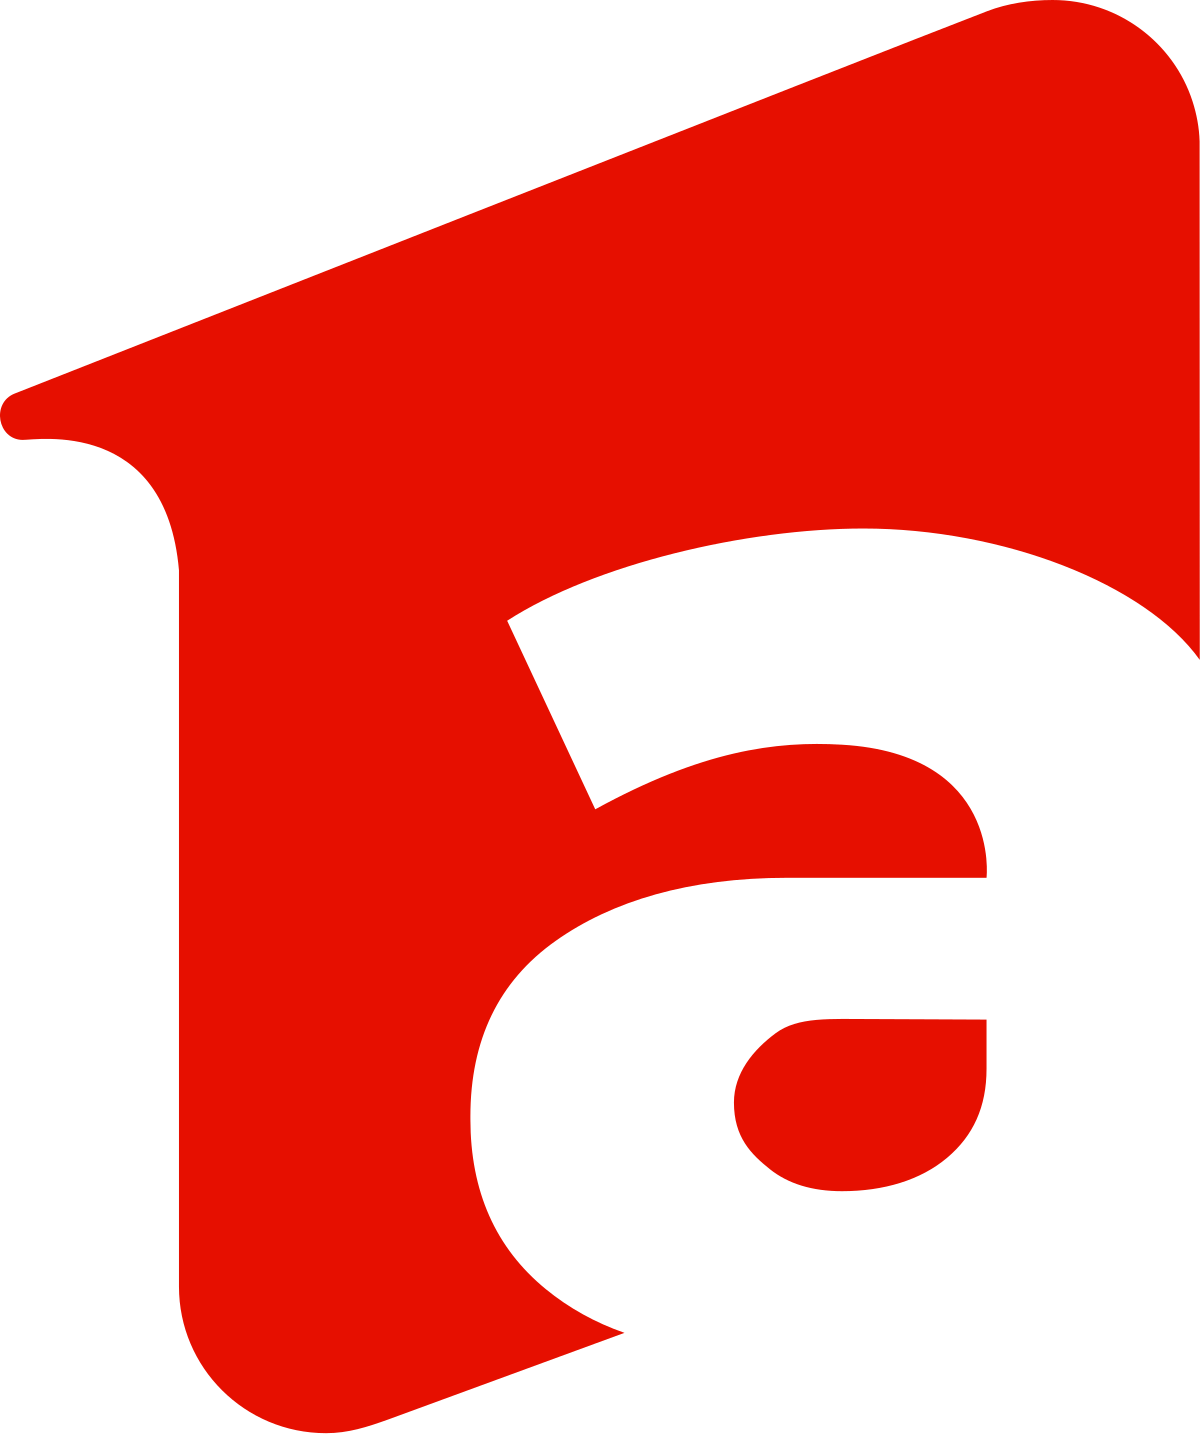 Tahiti Take away excess Antena 1 (Romania) - Wikipedia